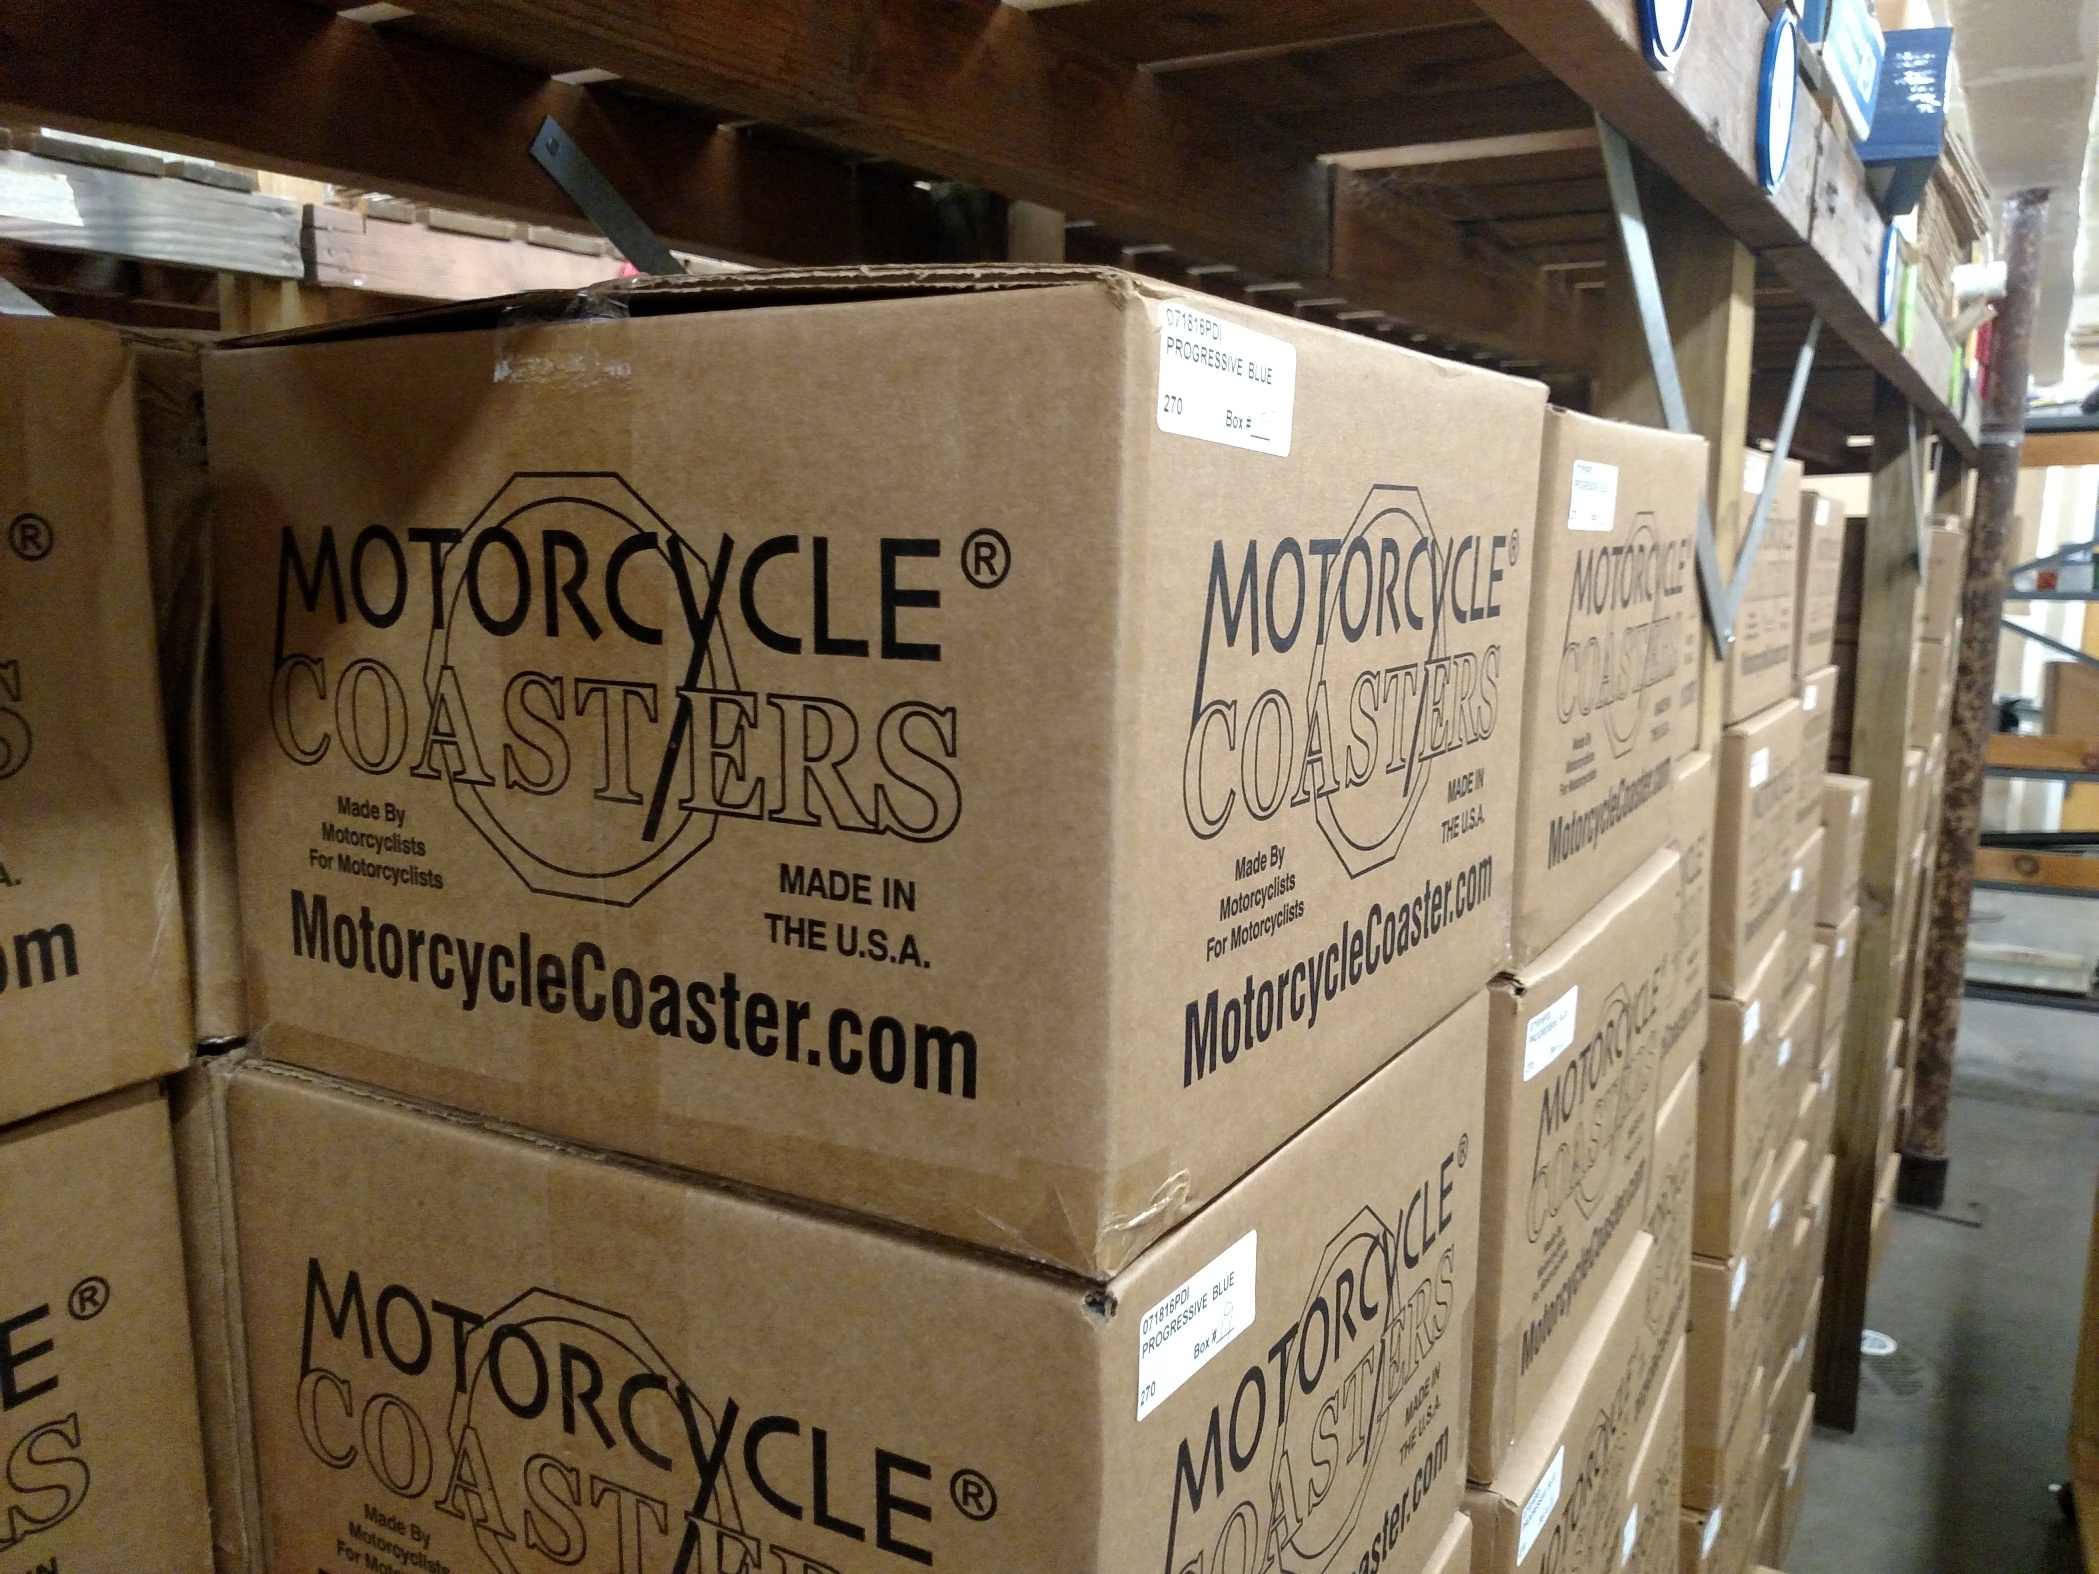 Motorcycle Coasters® stock